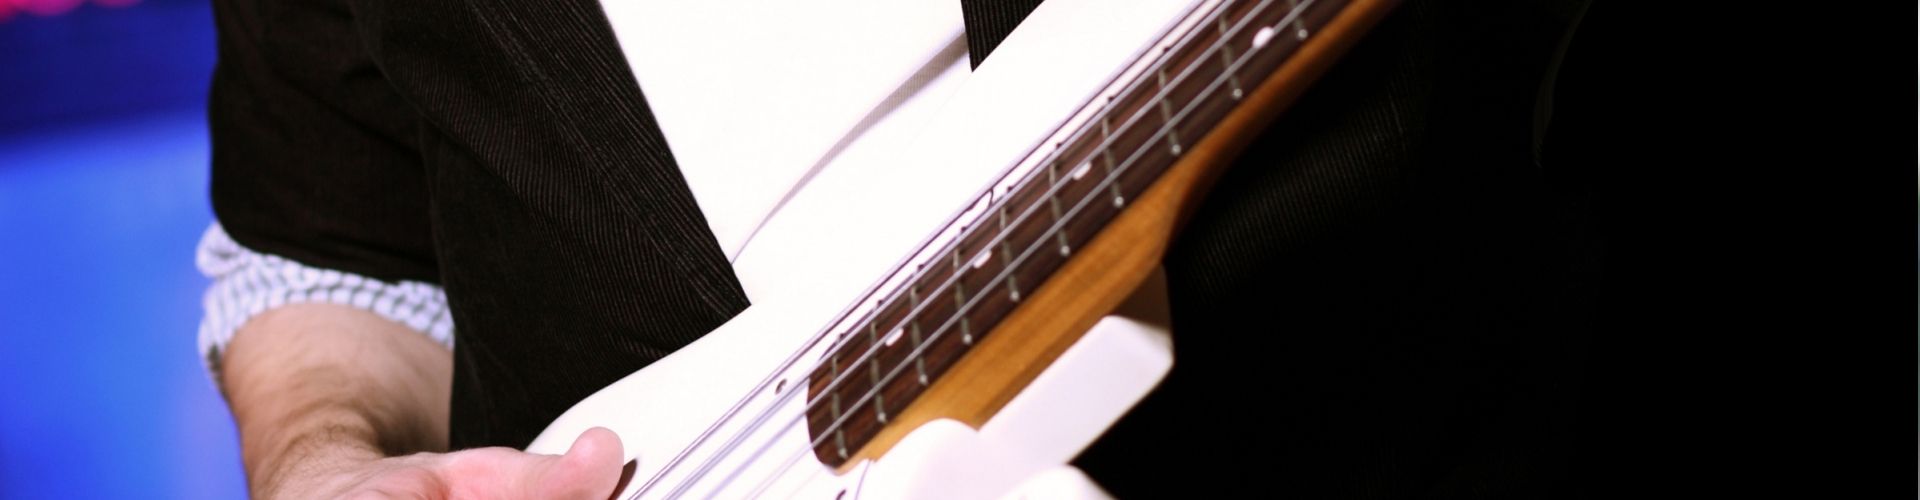 Purely Bass Guitar Image